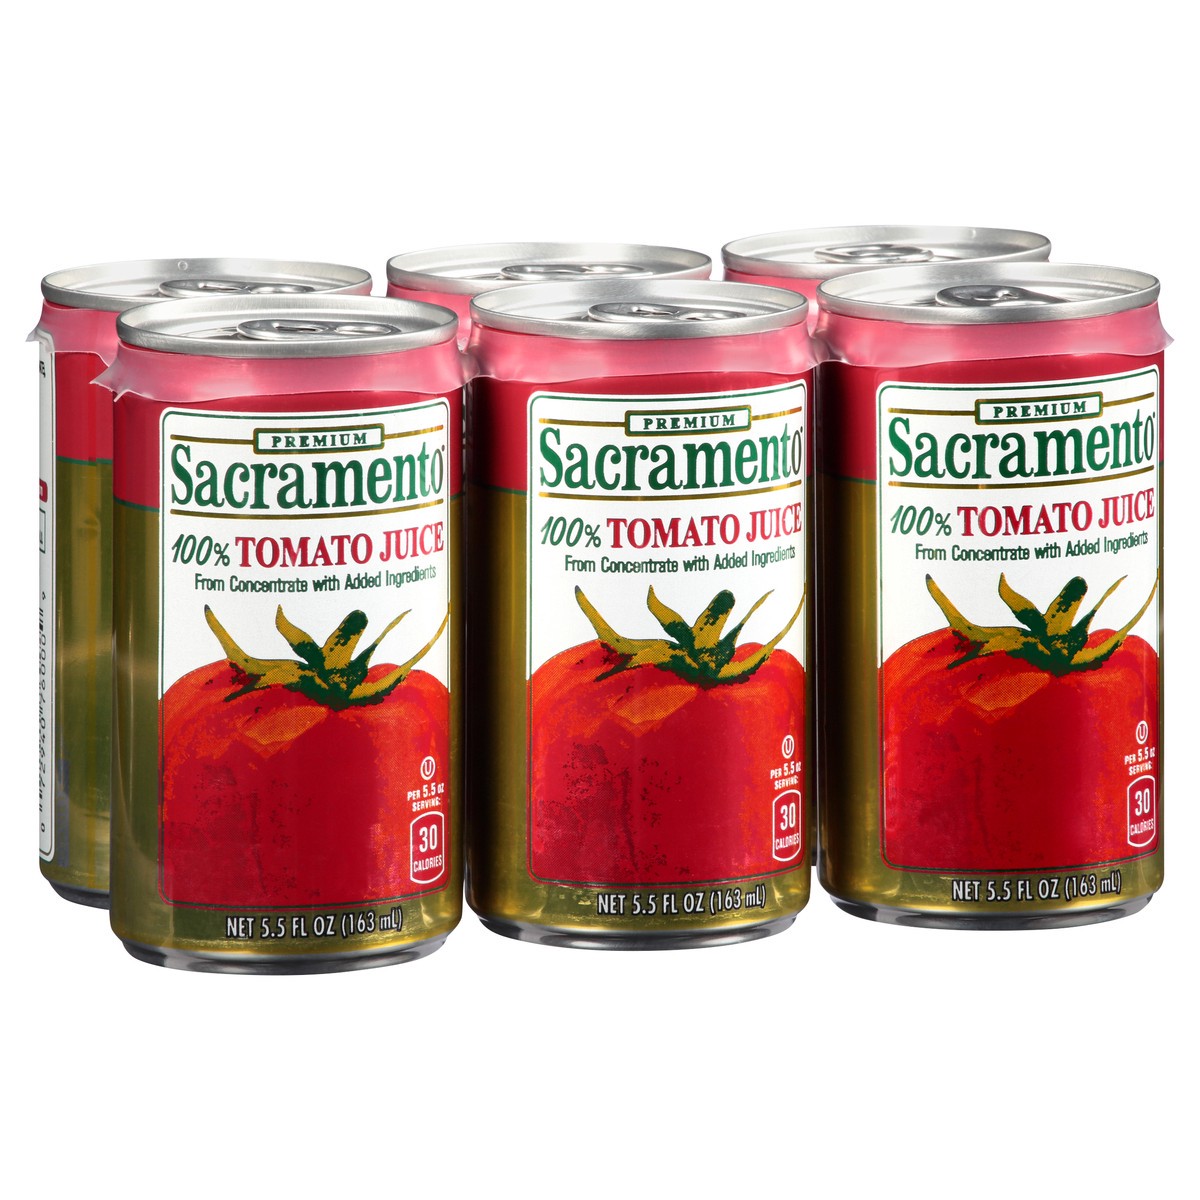 slide 8 of 14, Sacramento Premium 100% Tomato Juice 6-5.5 fl. oz. Cans, 6 ct